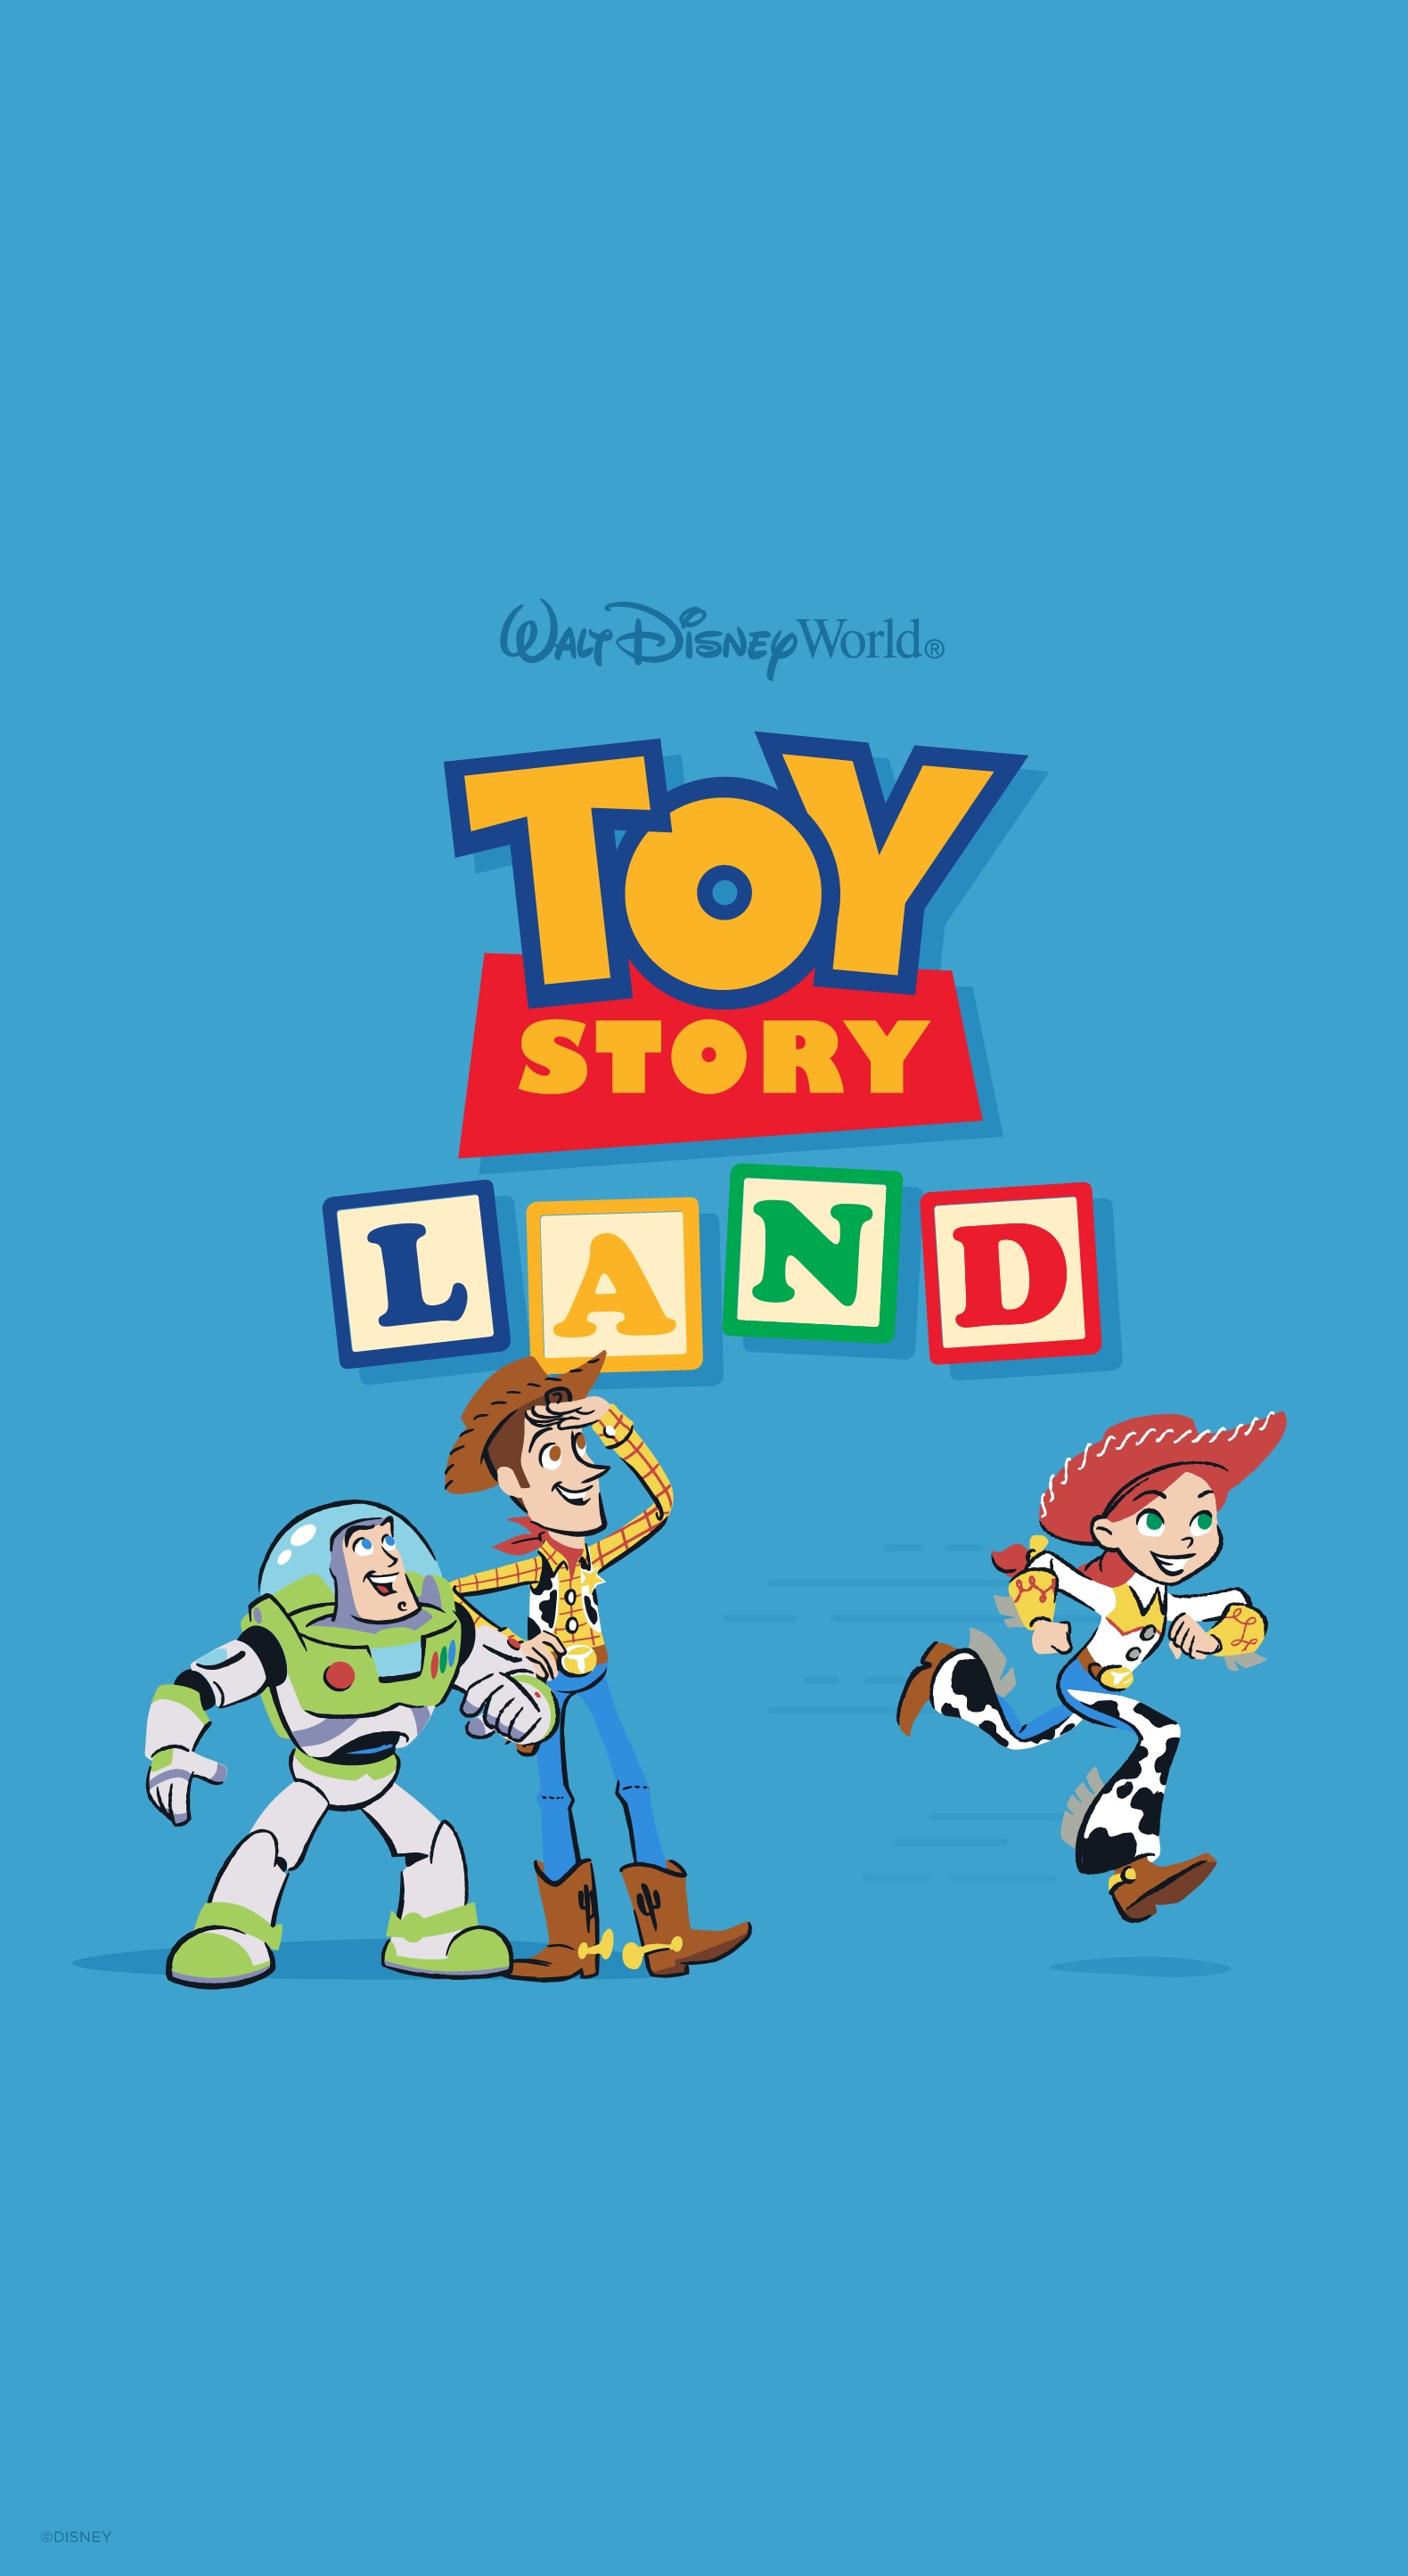 Toy Story Land Wallpaper – Mobile | Disney Parks Blog